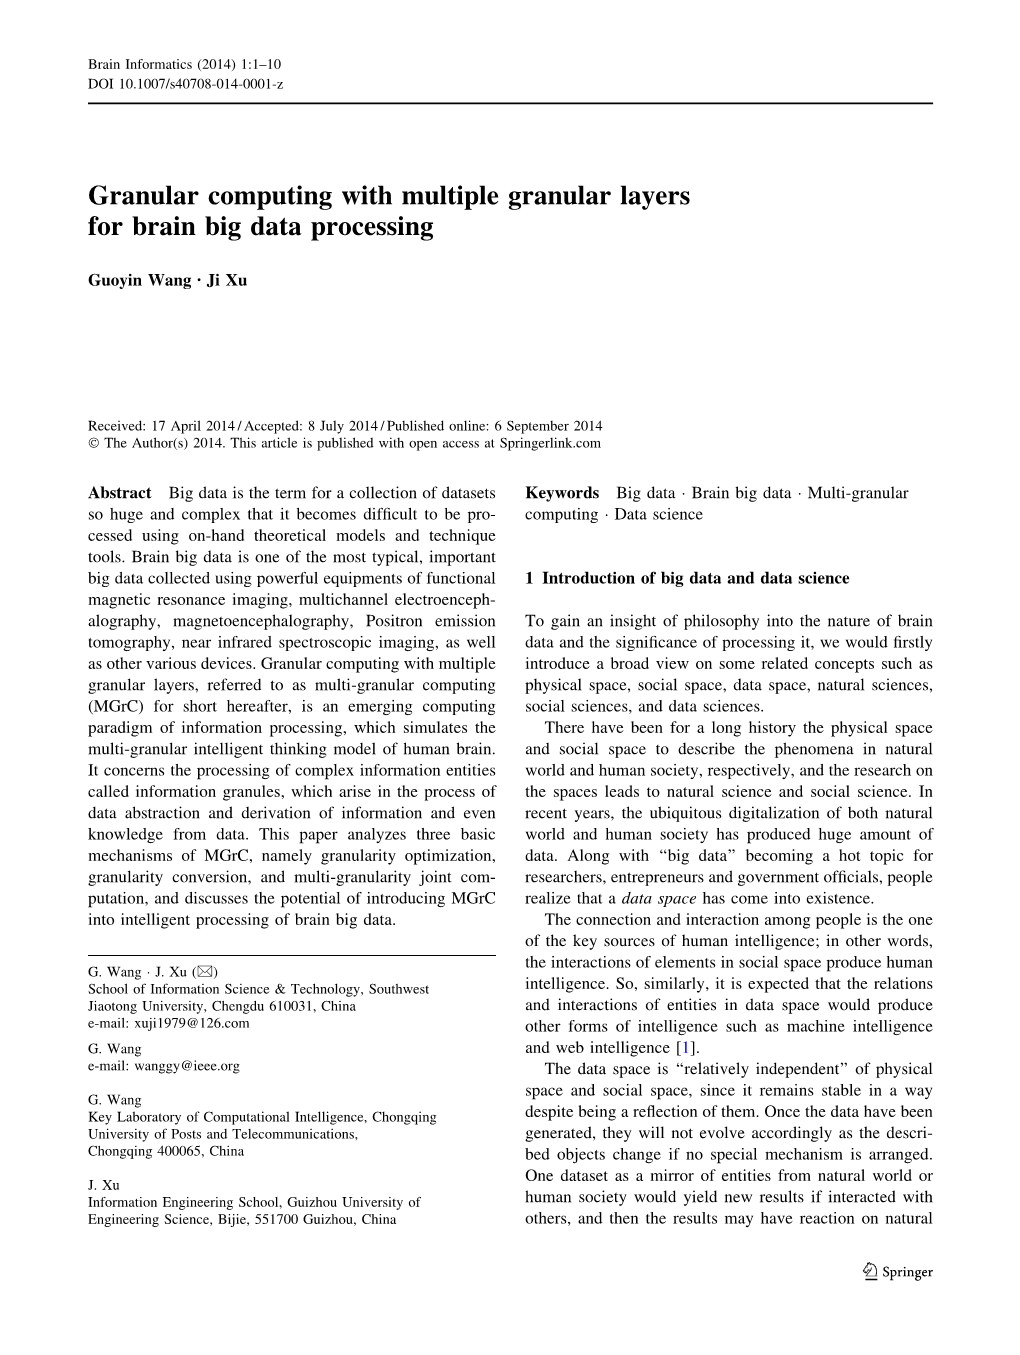 Granular Computing with Multiple Granular Layers for Brain Big Data Processing